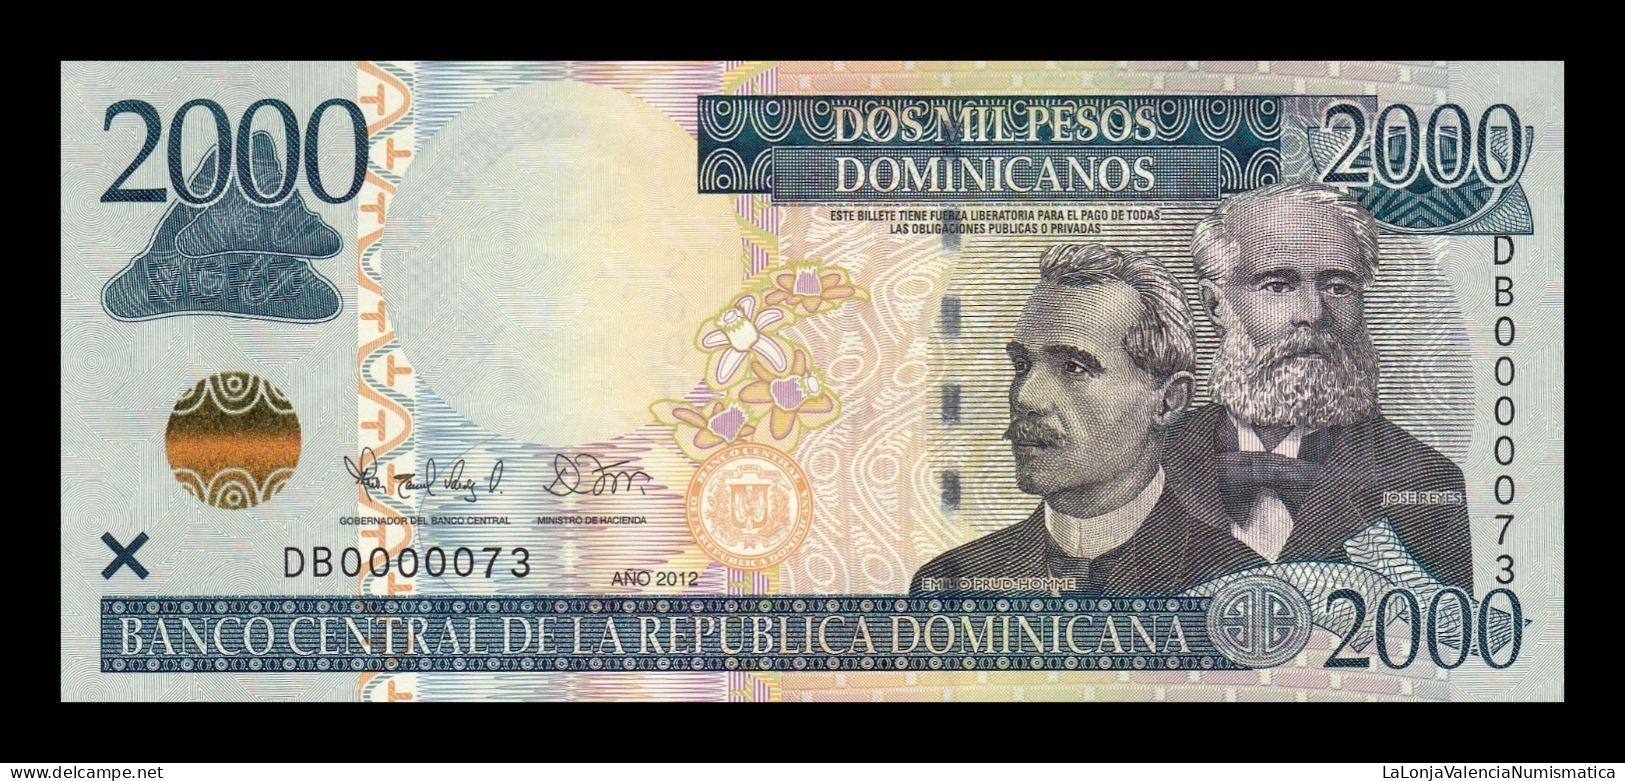 República Dominicana 2000 Pesos Dominicanos 2012 Pick 188b Low Serial 73 Sc Unc - Dominicaine